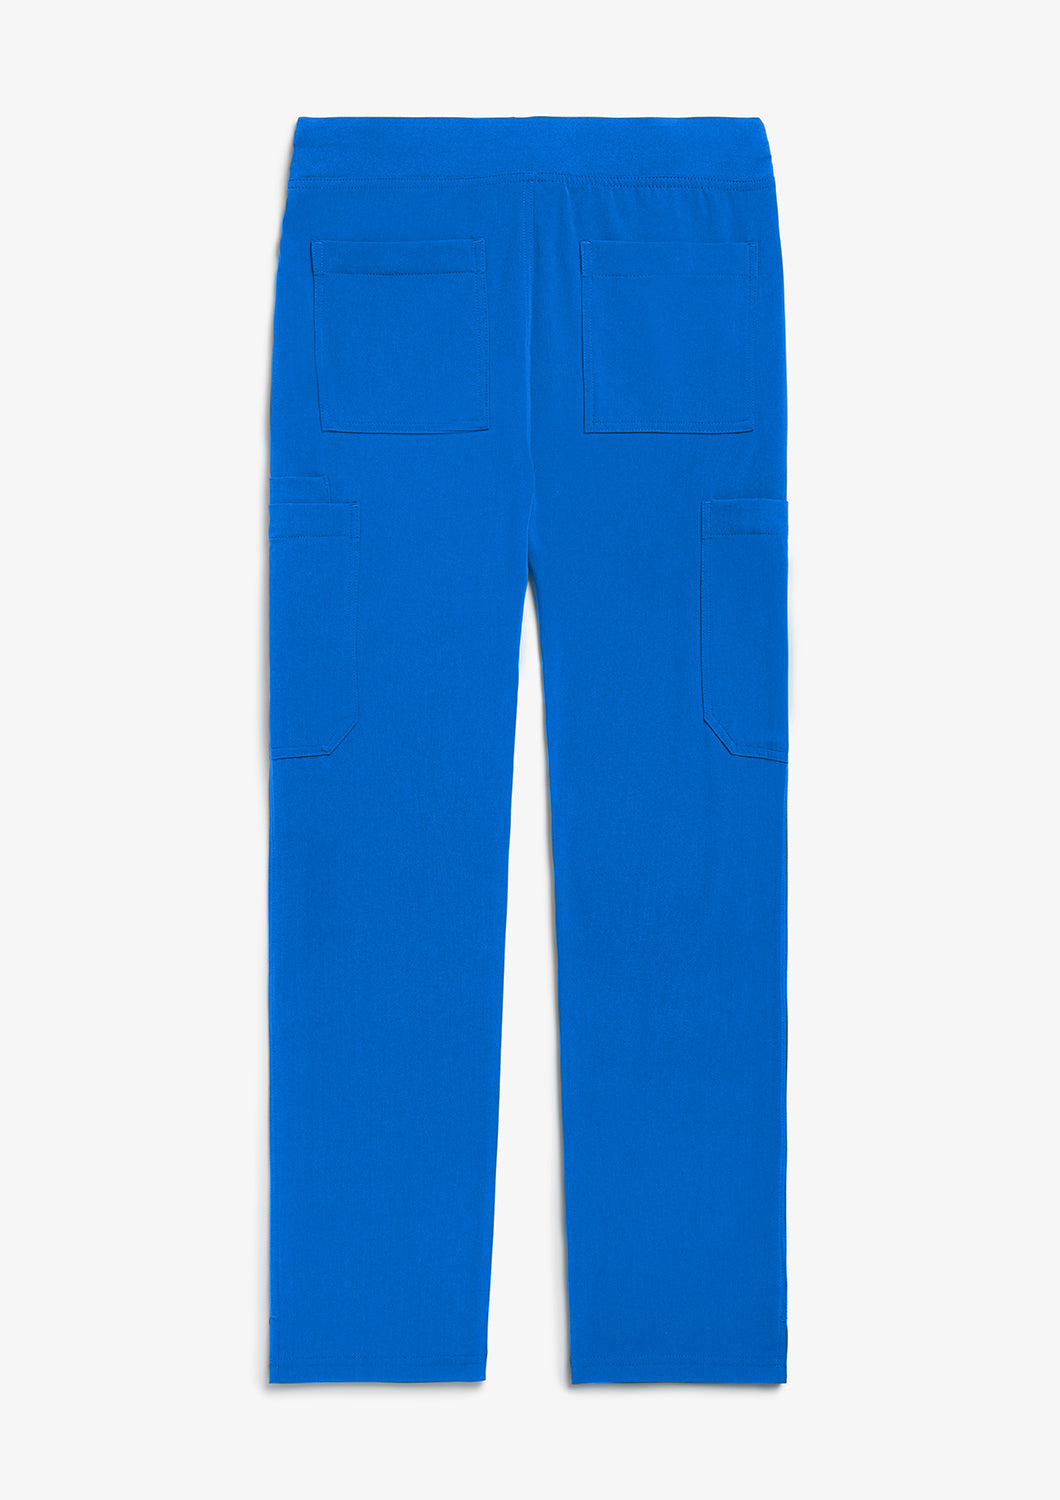 Union Pants - Royal Blue